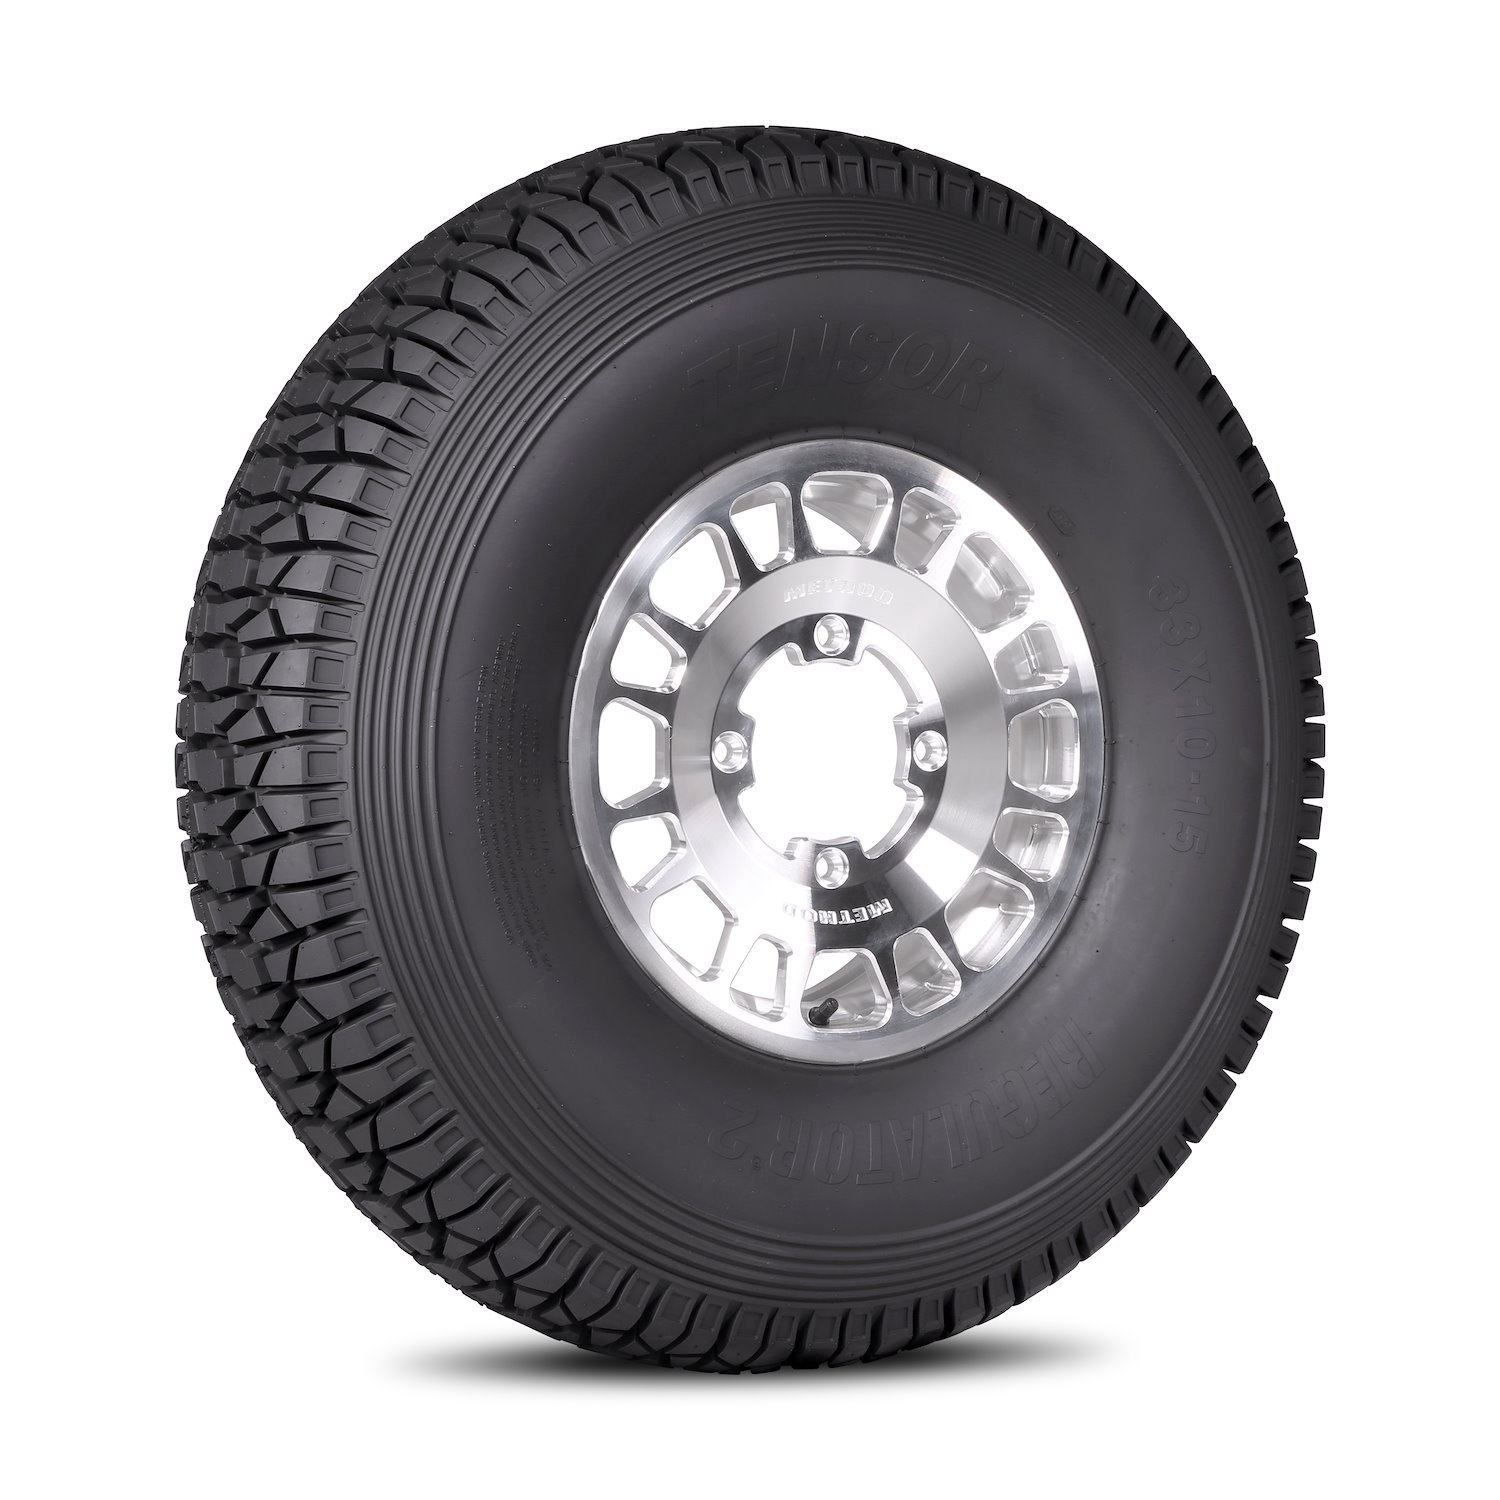 RR301014AT Regulator 2 Tire, 30x10-14